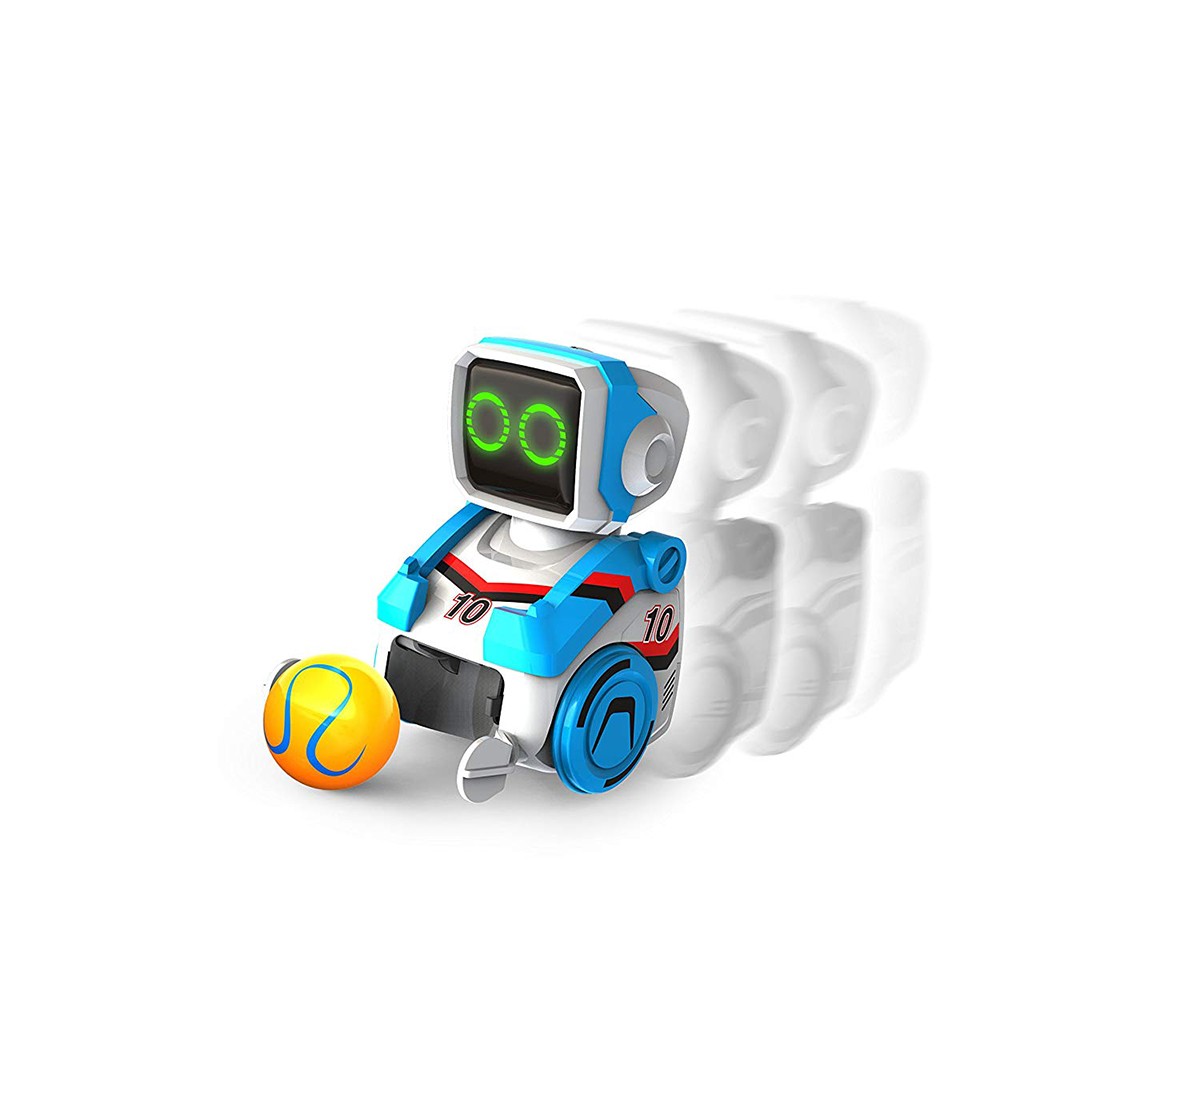 Silverlit Kickabot - A Kickoff To Robot Games Robotics for Kids age 3Y+ (White)